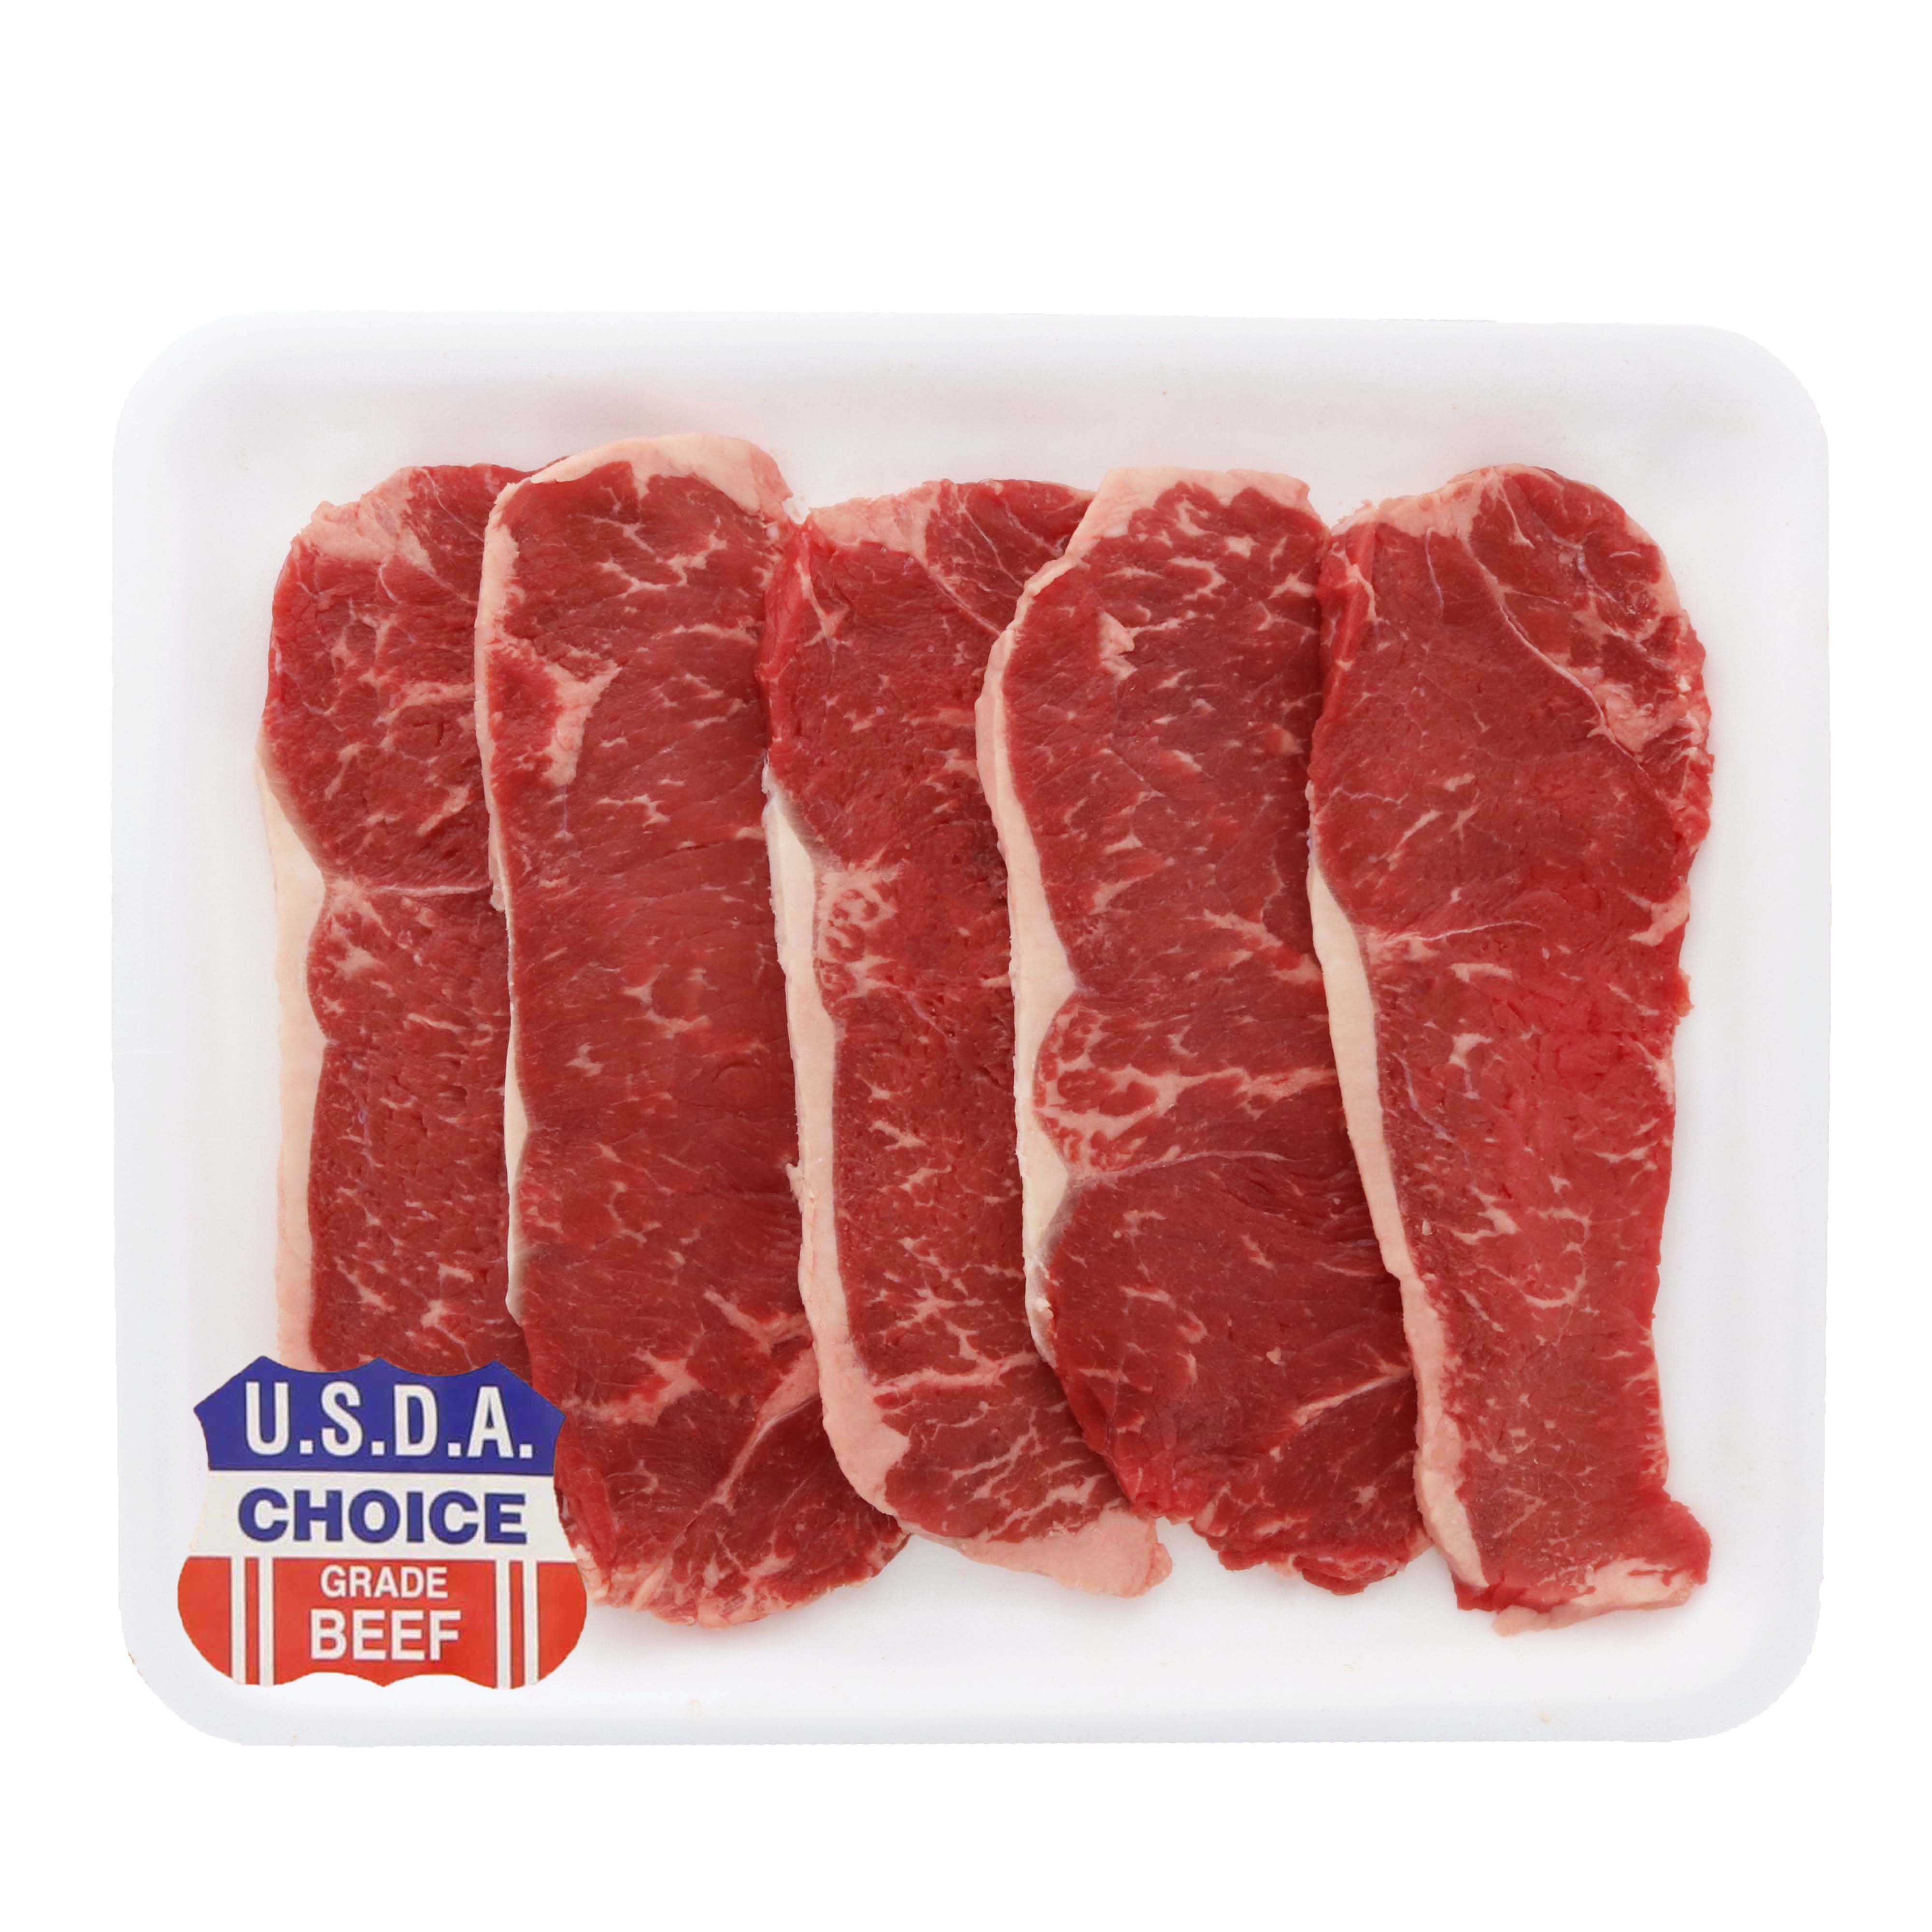 H E B Beef New York Strip Steak Boneless Thin Value Pack Usda Choice Shop Beef At H E B 